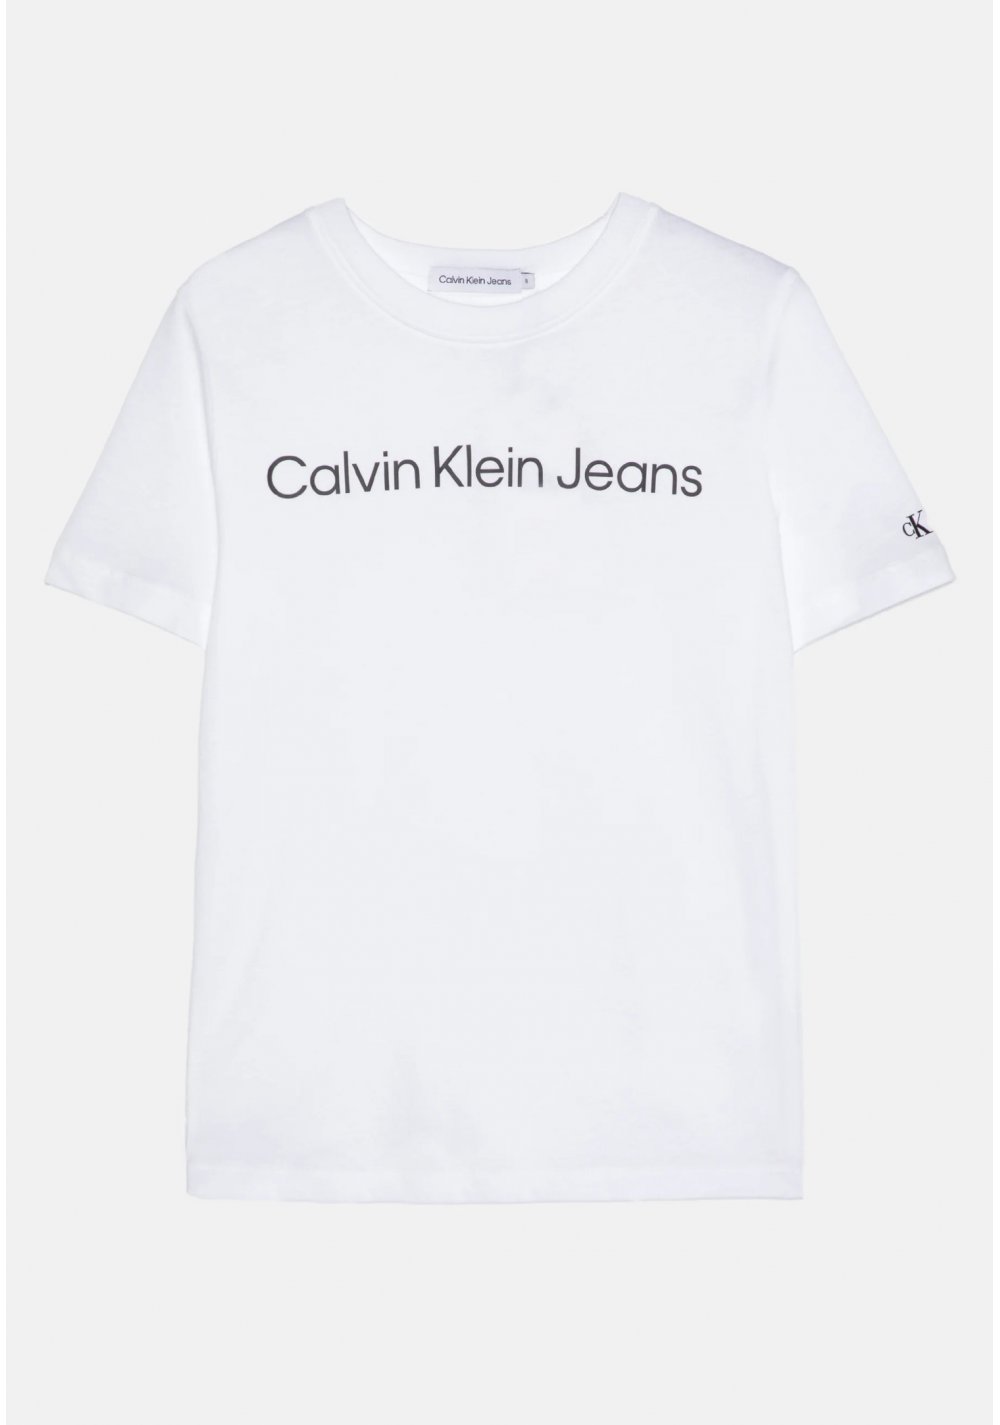 Calvin Klein Jeans bambini LOGO UNISEX - T-shirt bianca con stampa